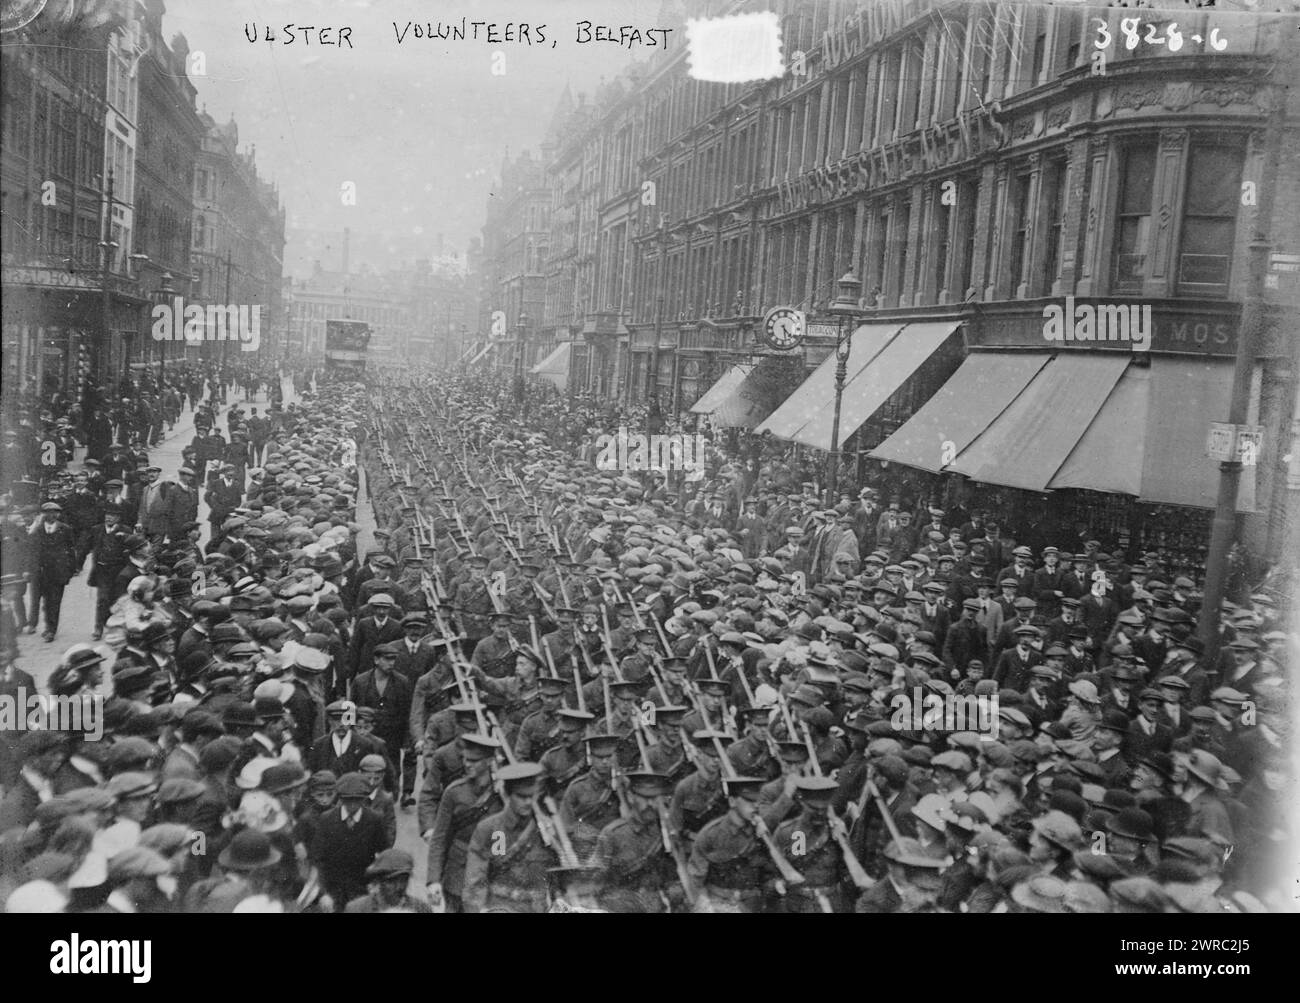 Ulster Volunteers, Belfast, Photographs show Ulster volunteer soldiers from Belfast marching in the street during World War I., 1916 April 8, World War, 1914-1918, Glass negatives, 1 negative: glass Stock Photo